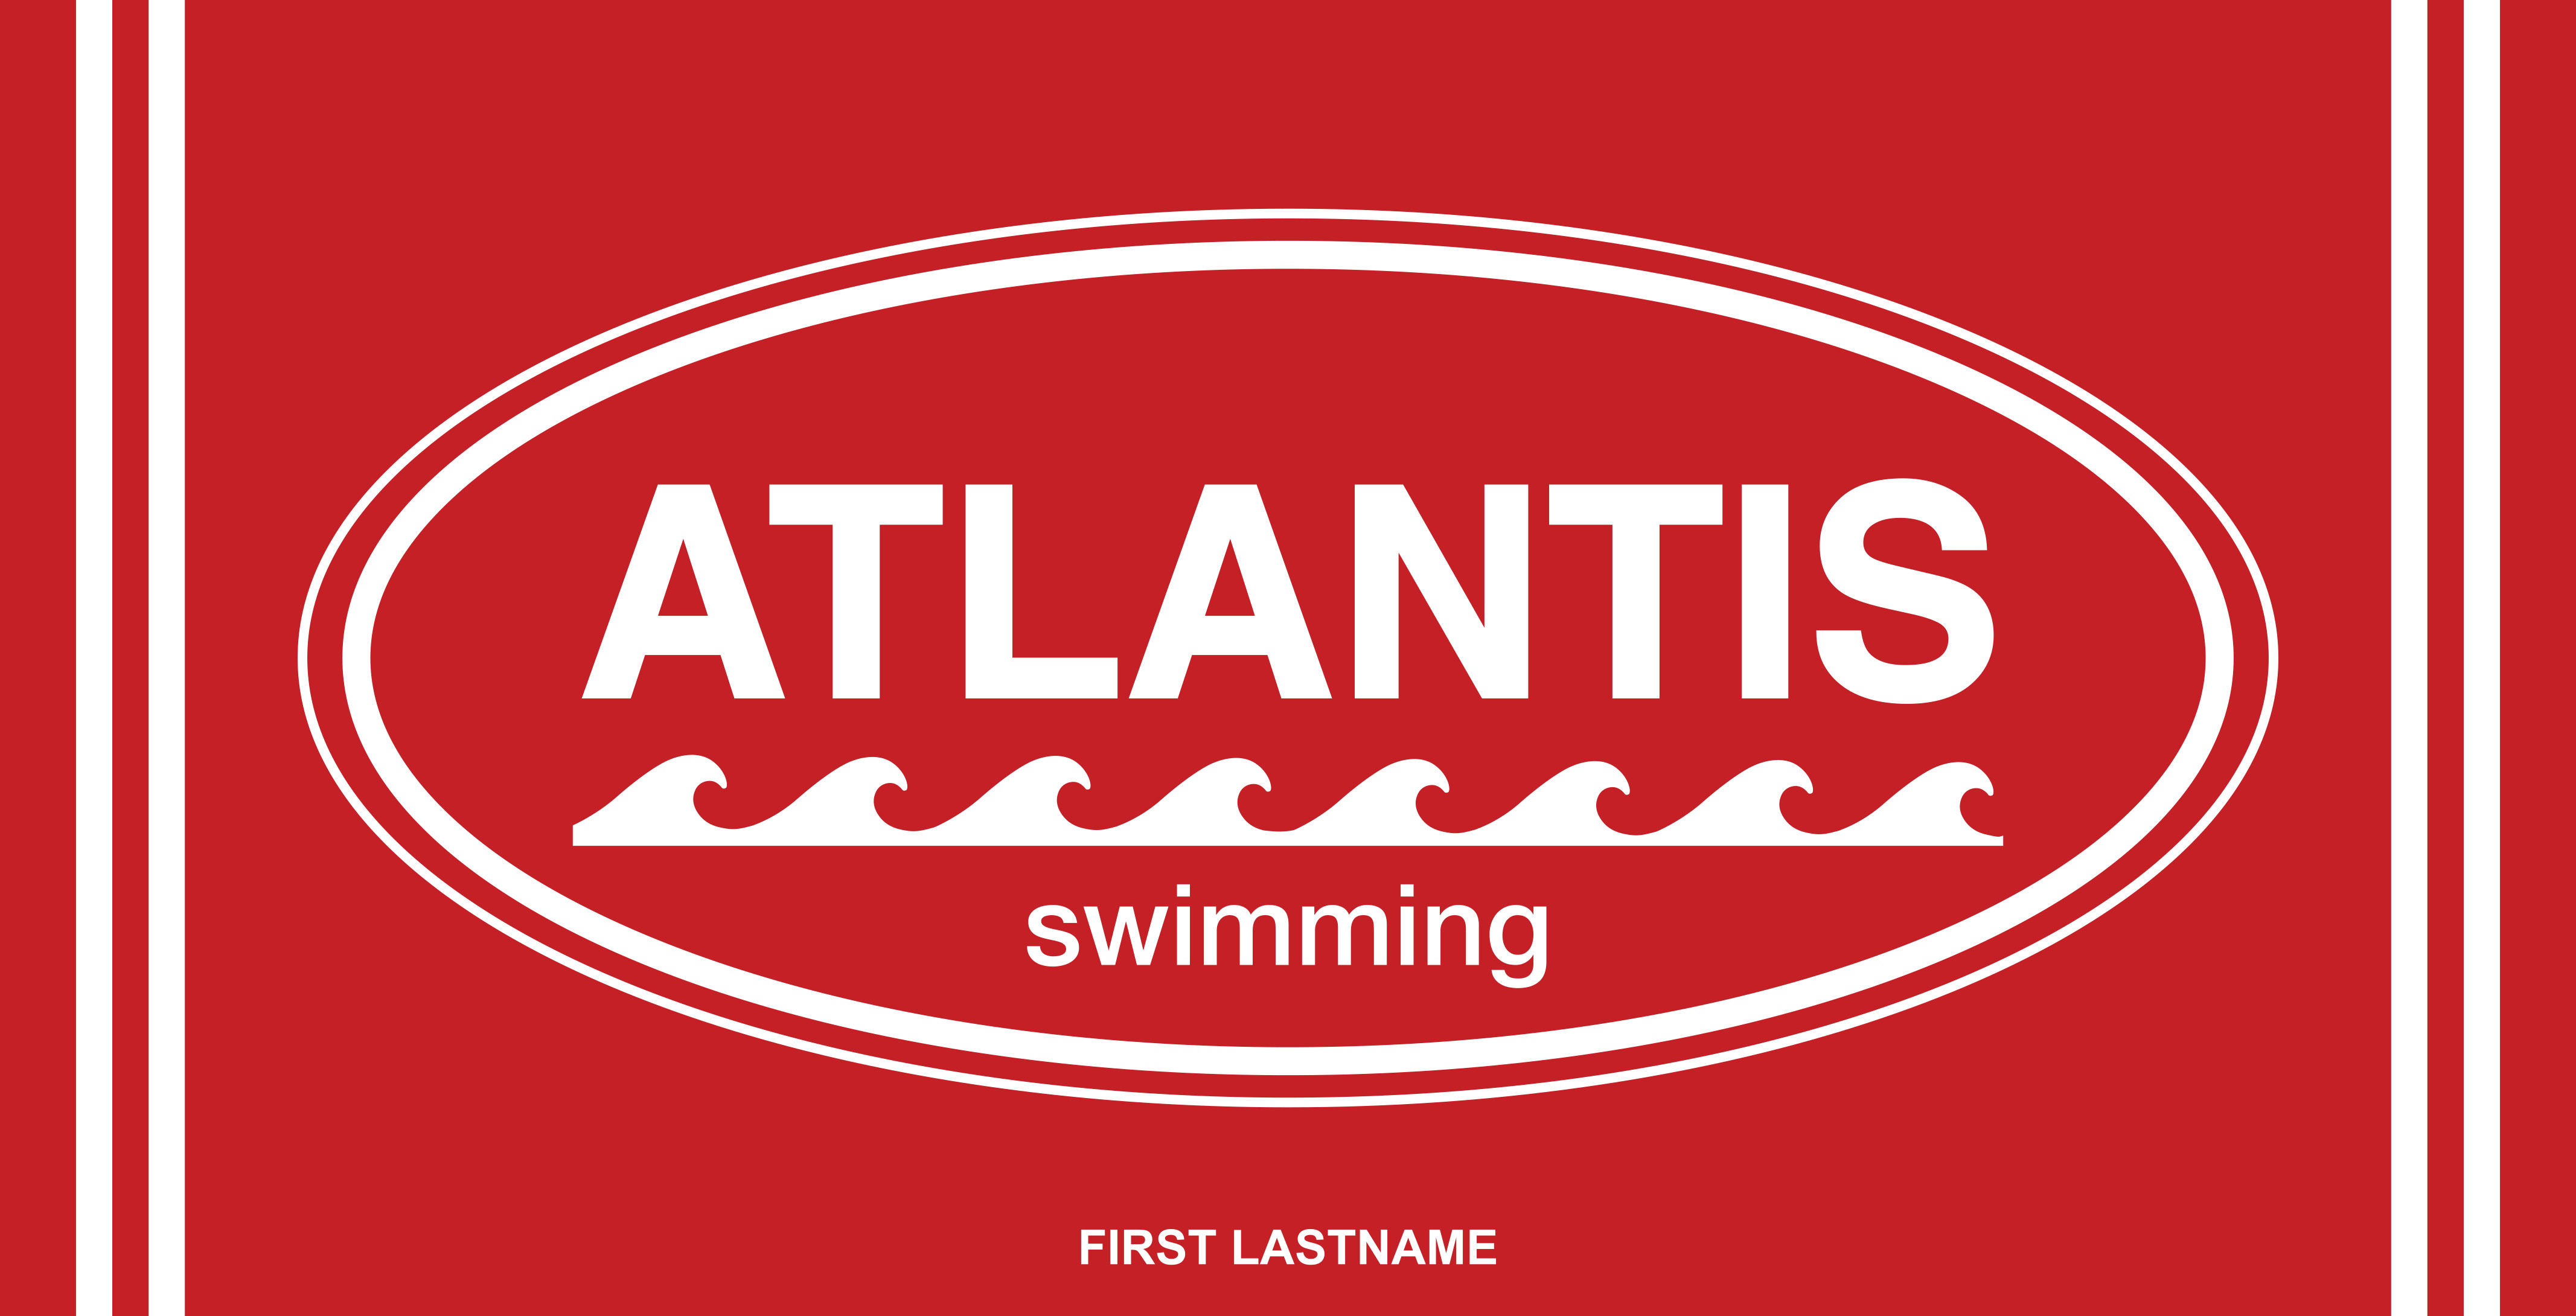 00068-AtlantaSwimming-2016-34x70_V2-PROOF